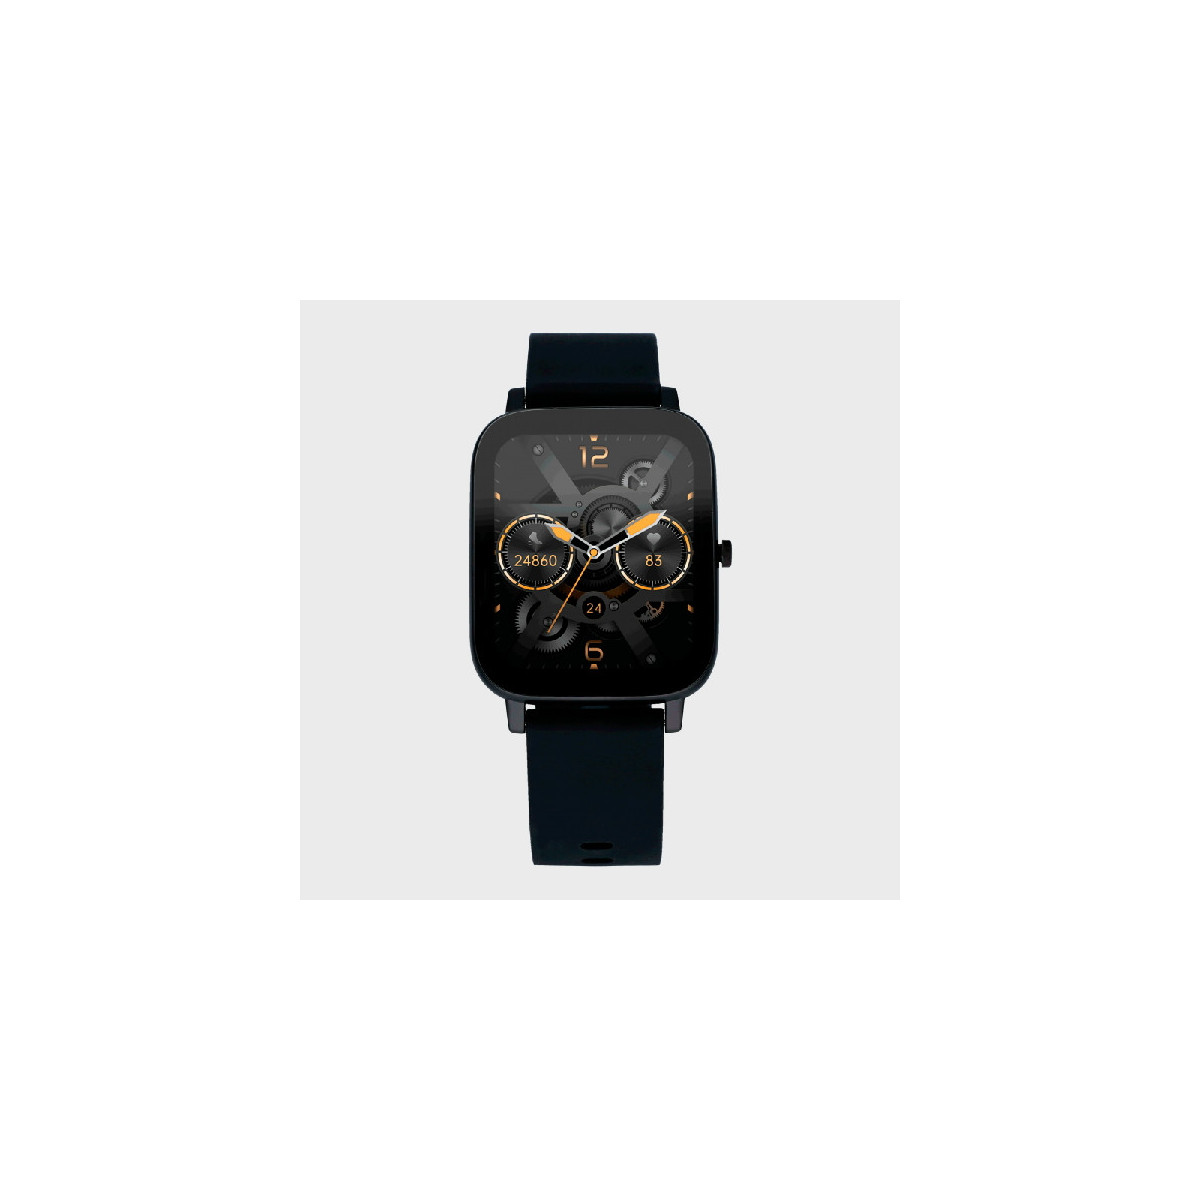 Reloj RADIANT Smartwatch Palm Beach unisex IP negro